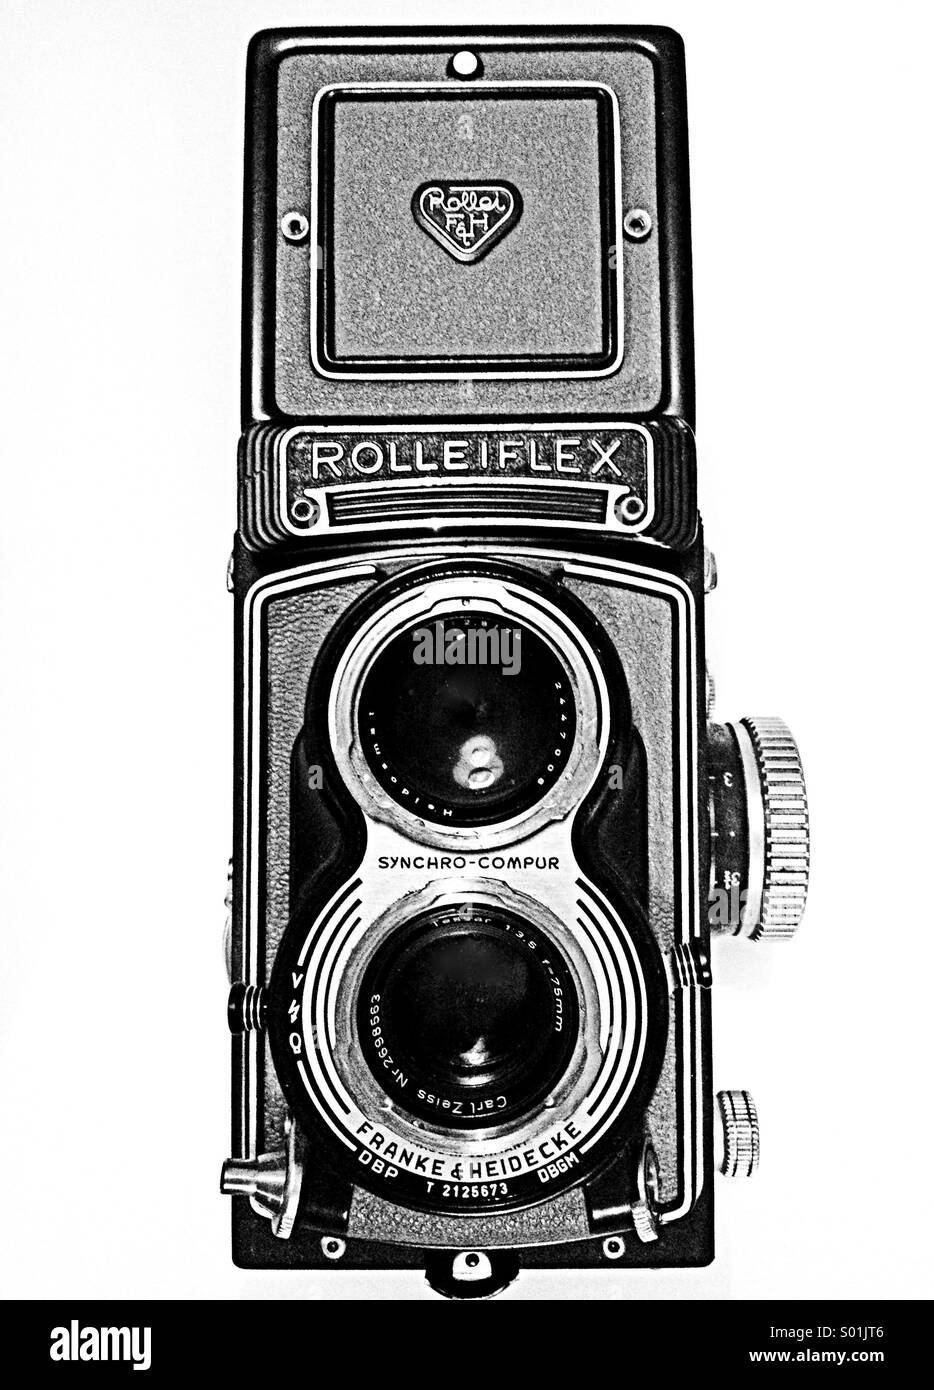 Rolleiflex T twin lens reflex camera Stock Photo